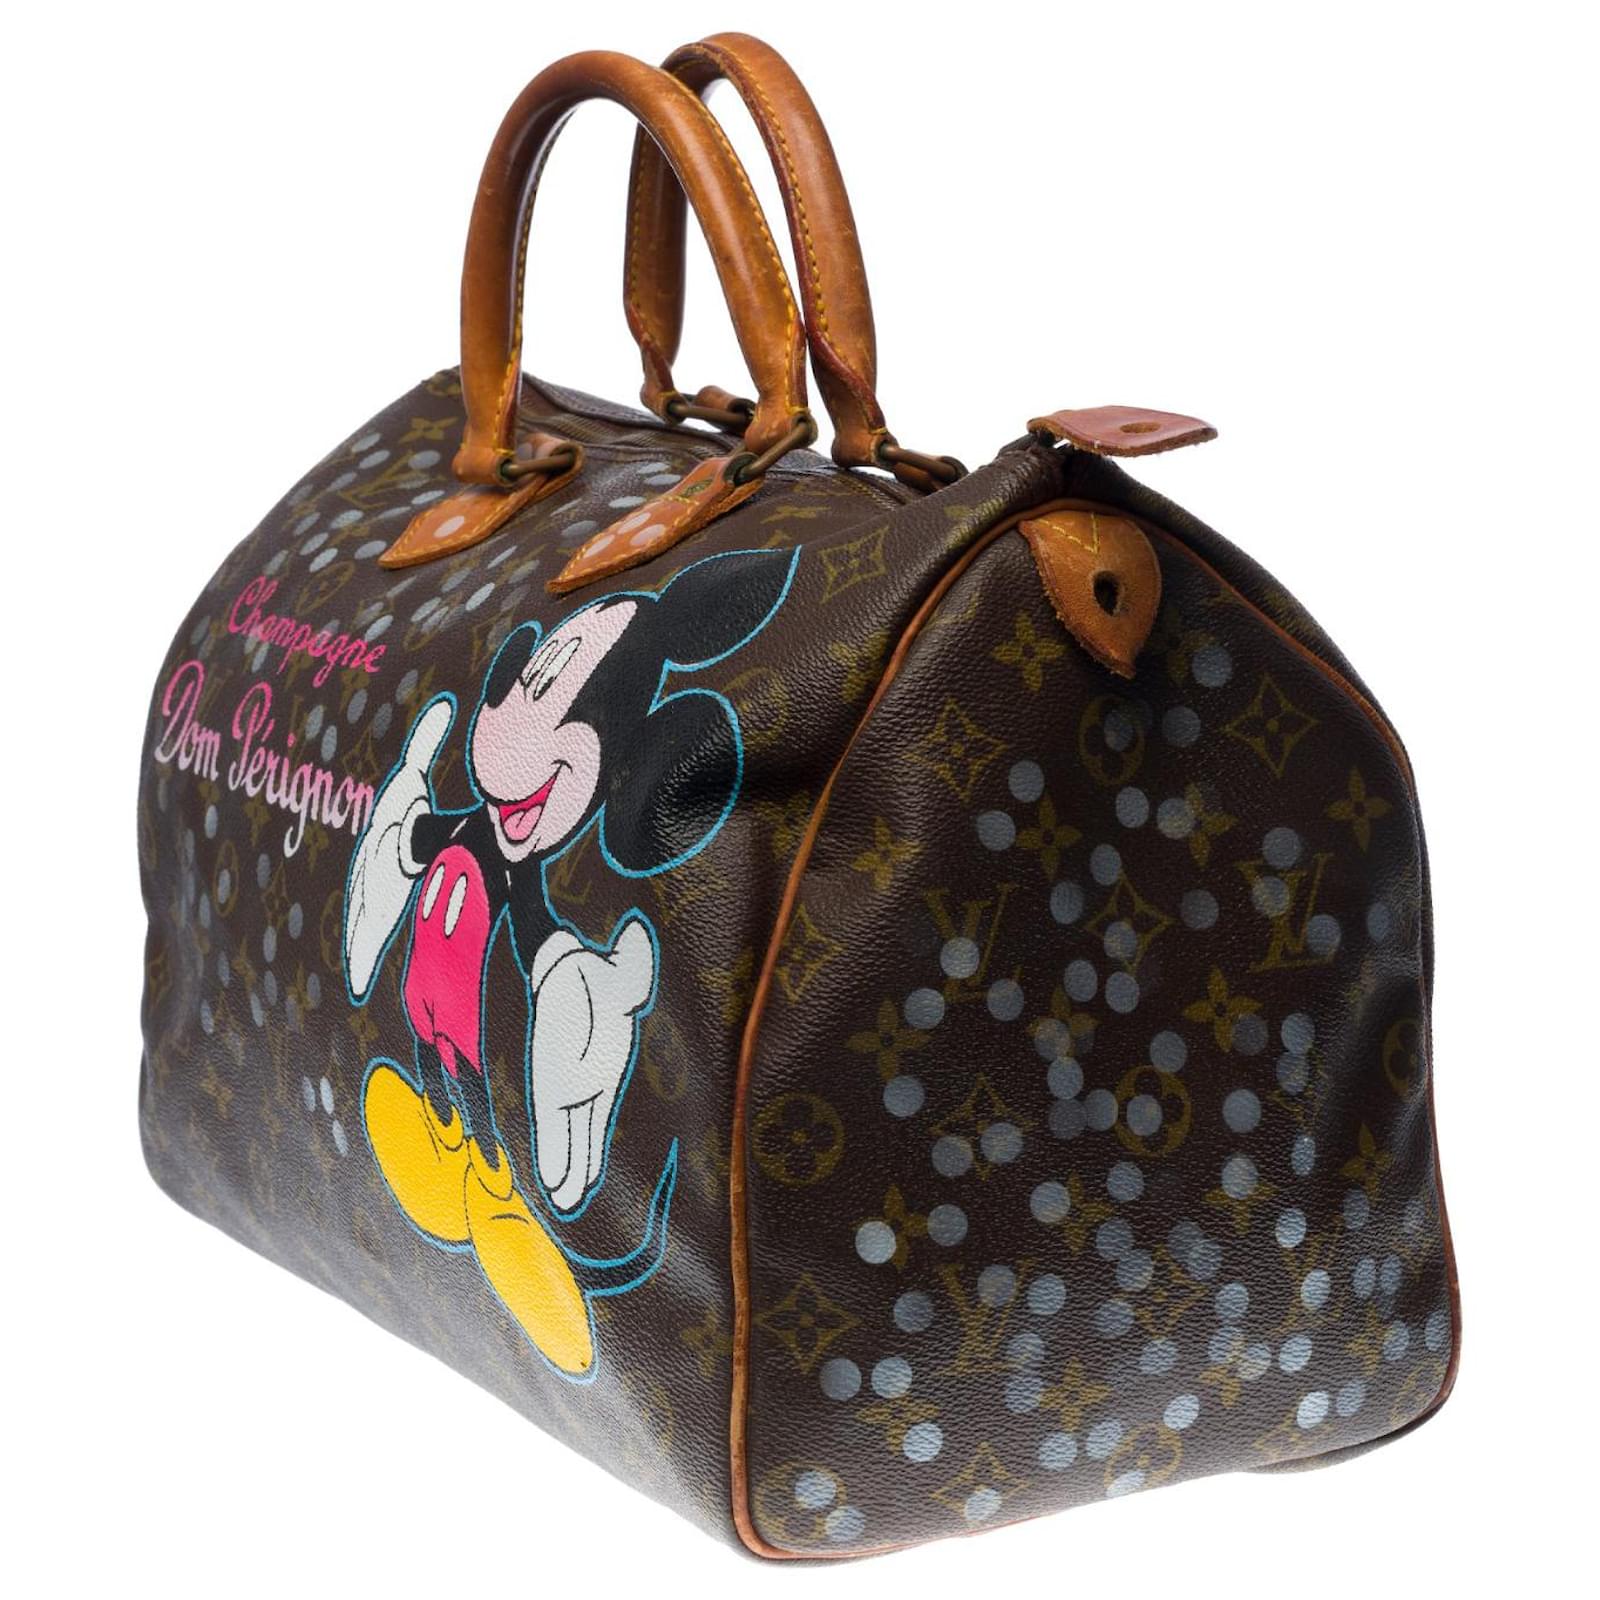 Louis Vuitton Speedy Handbag 35 in custom Monogram canvas Mickey